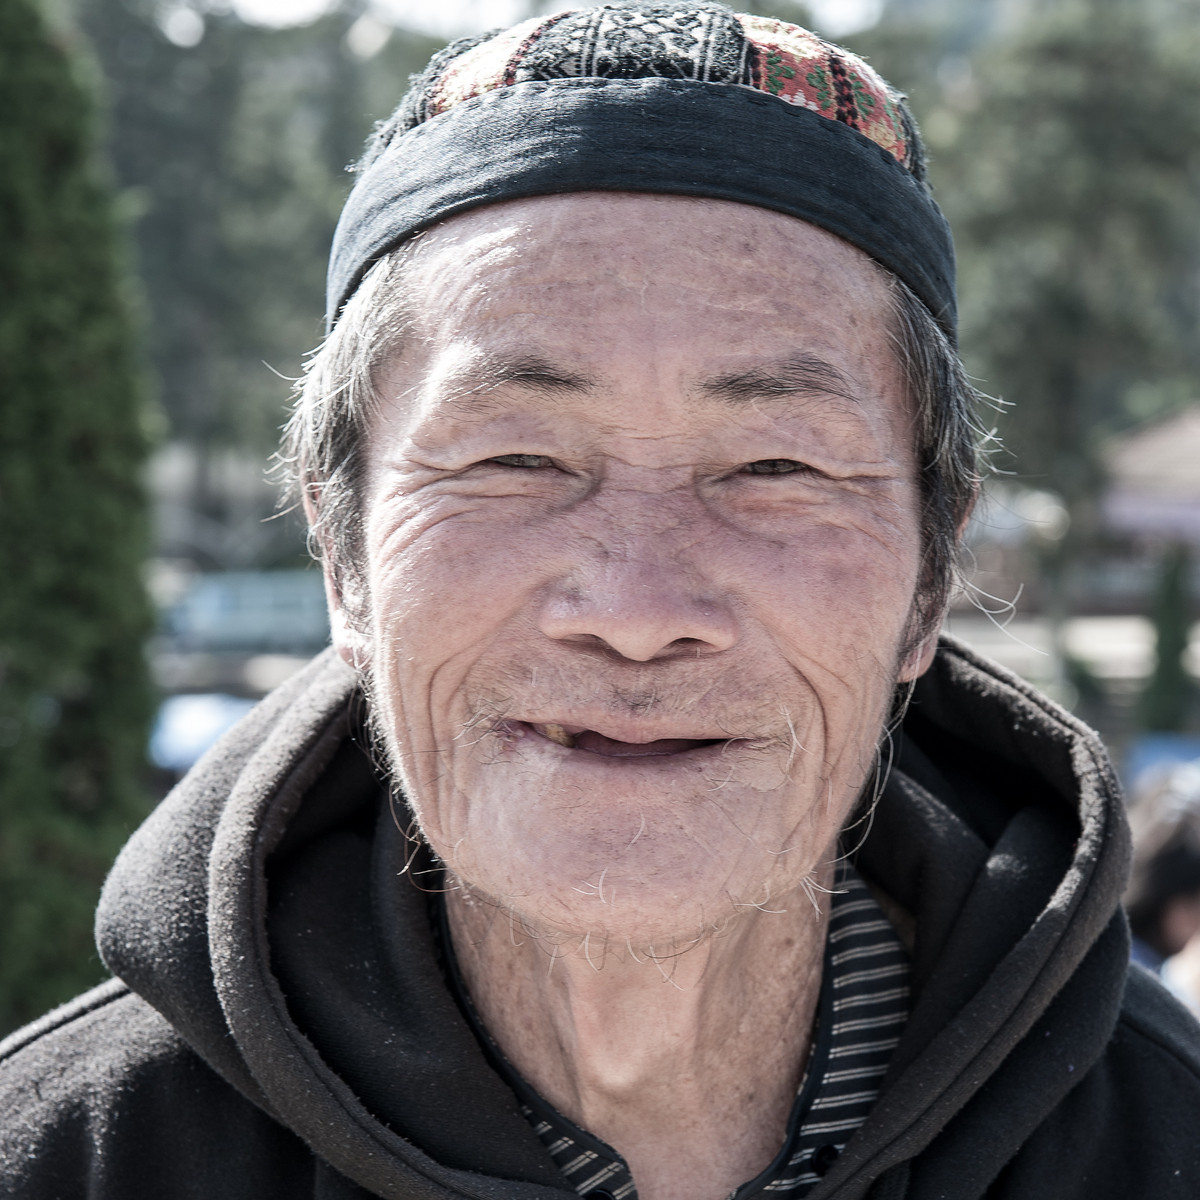      

 
  Old man in Sapa Vietnam.
 






















     